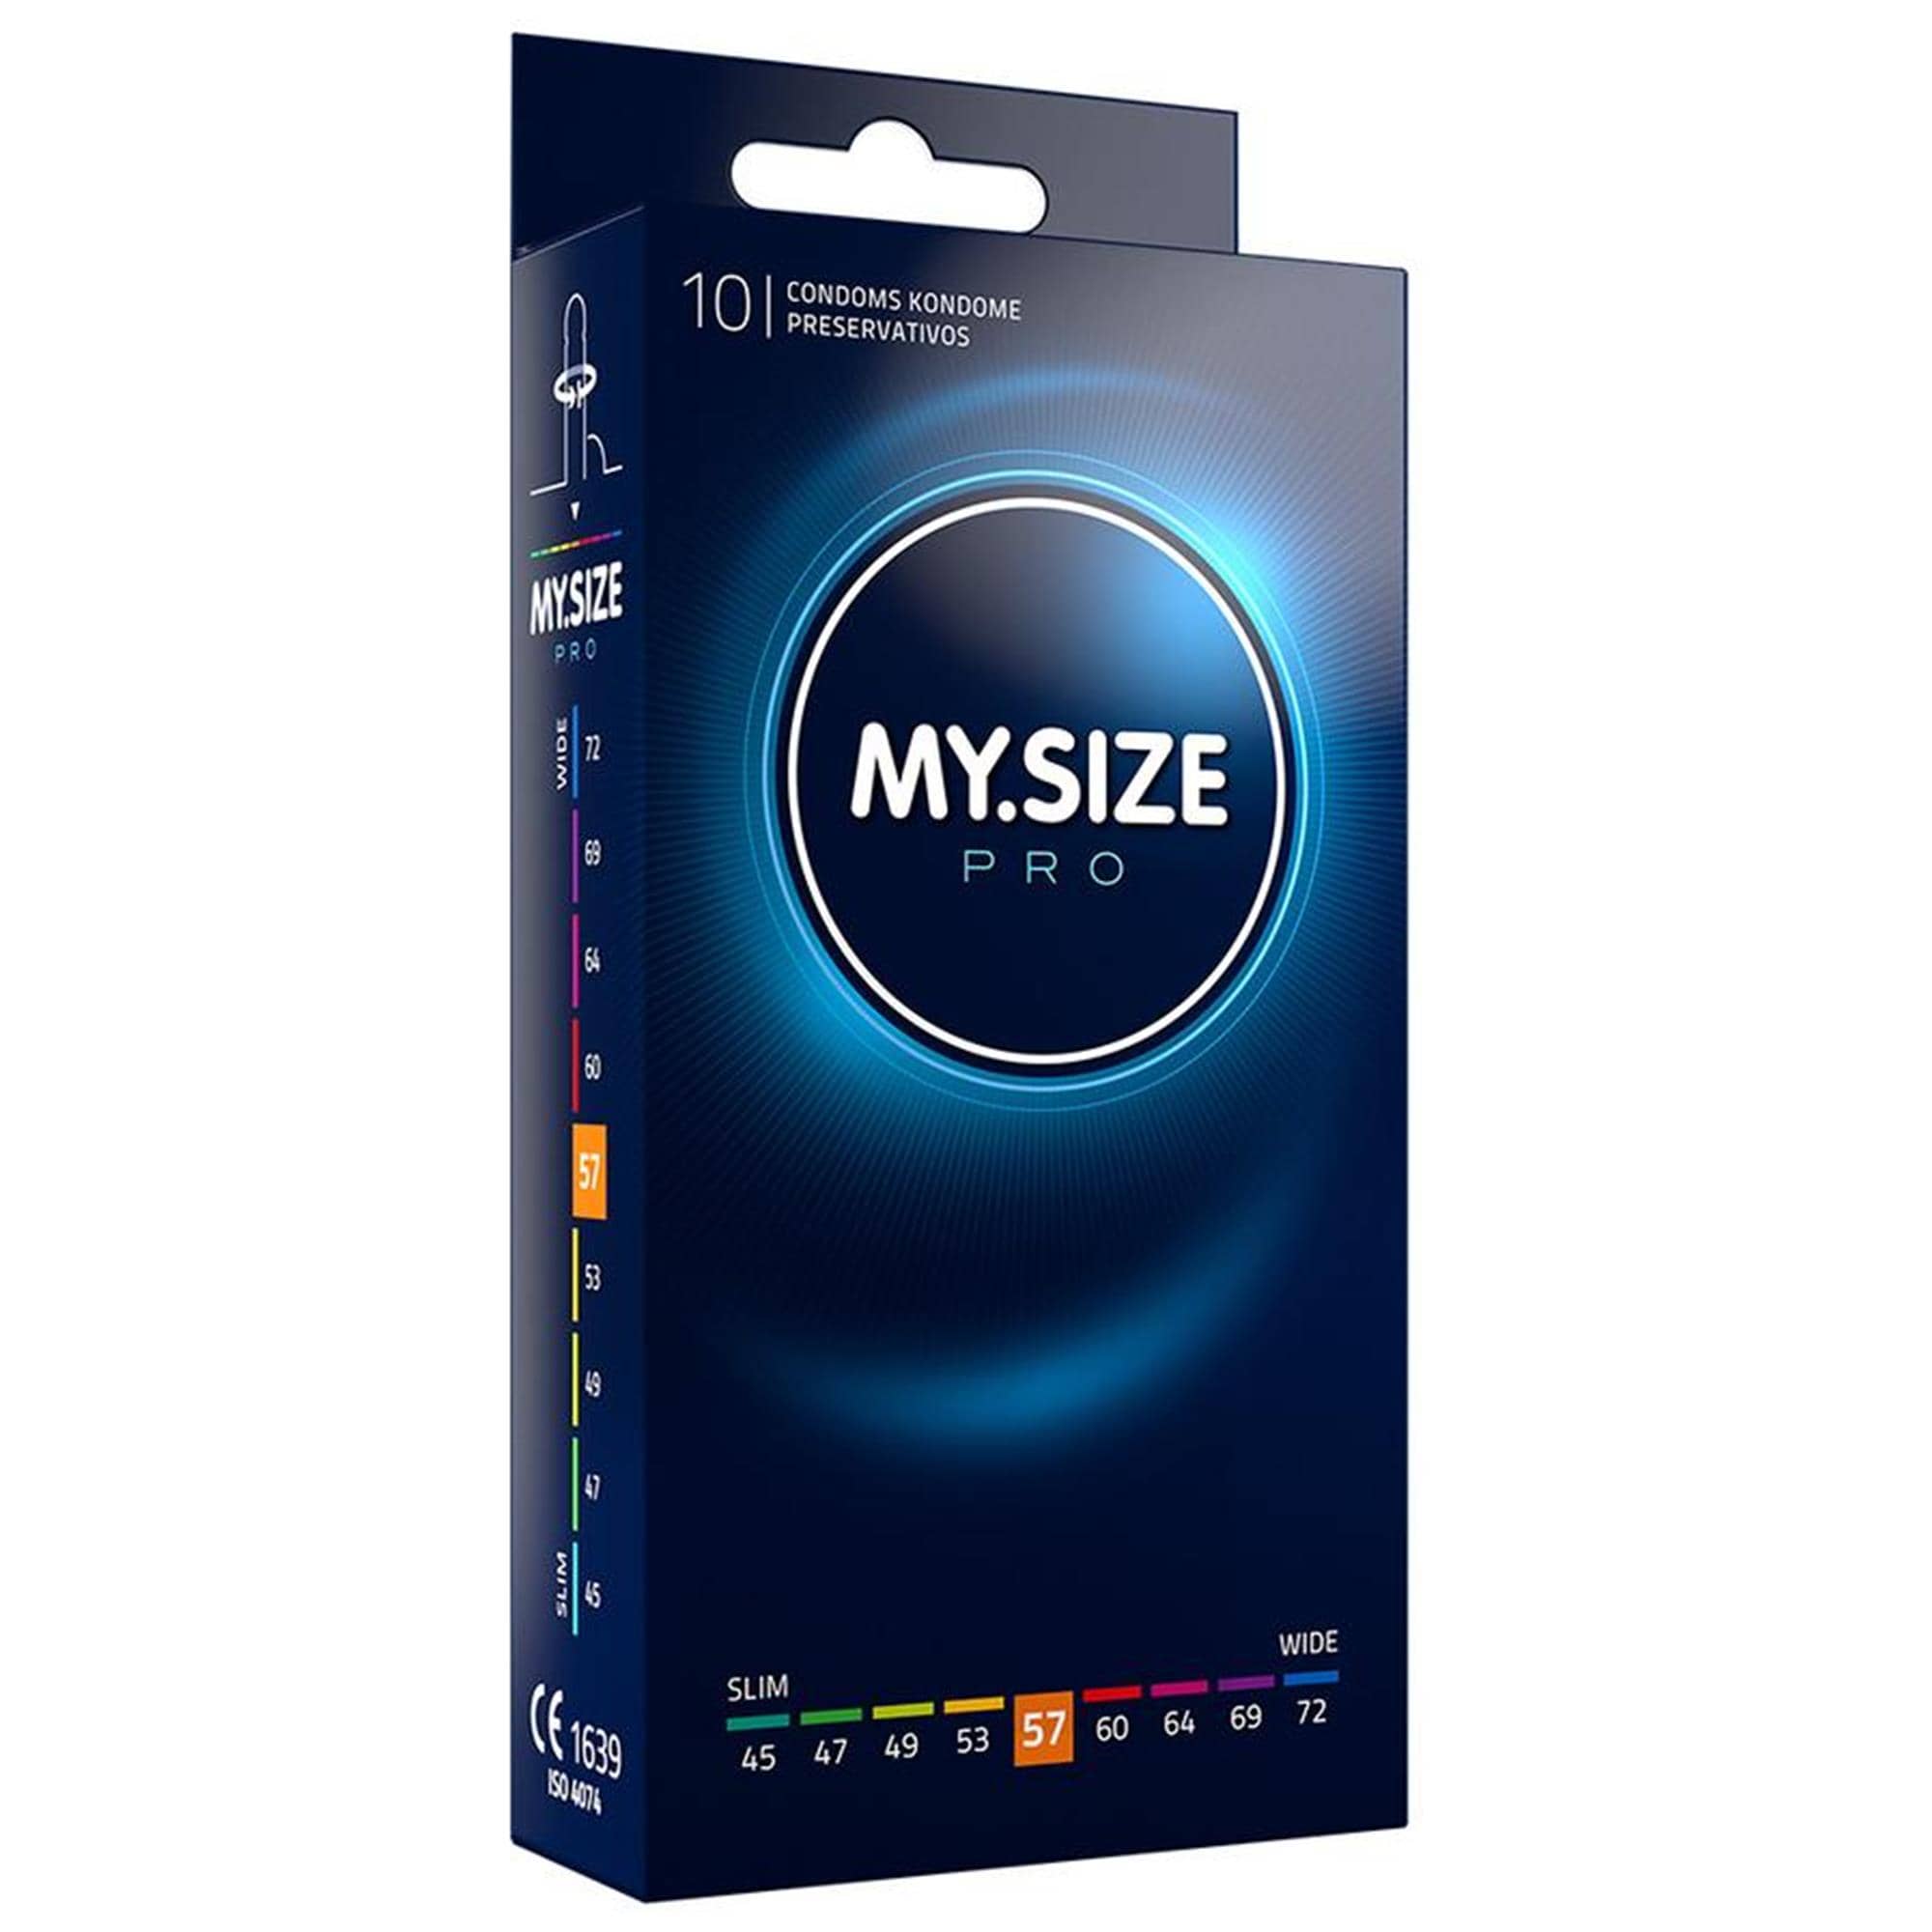 My Size Kondom 57 mm - 10-pack | Kondomer | Intimast